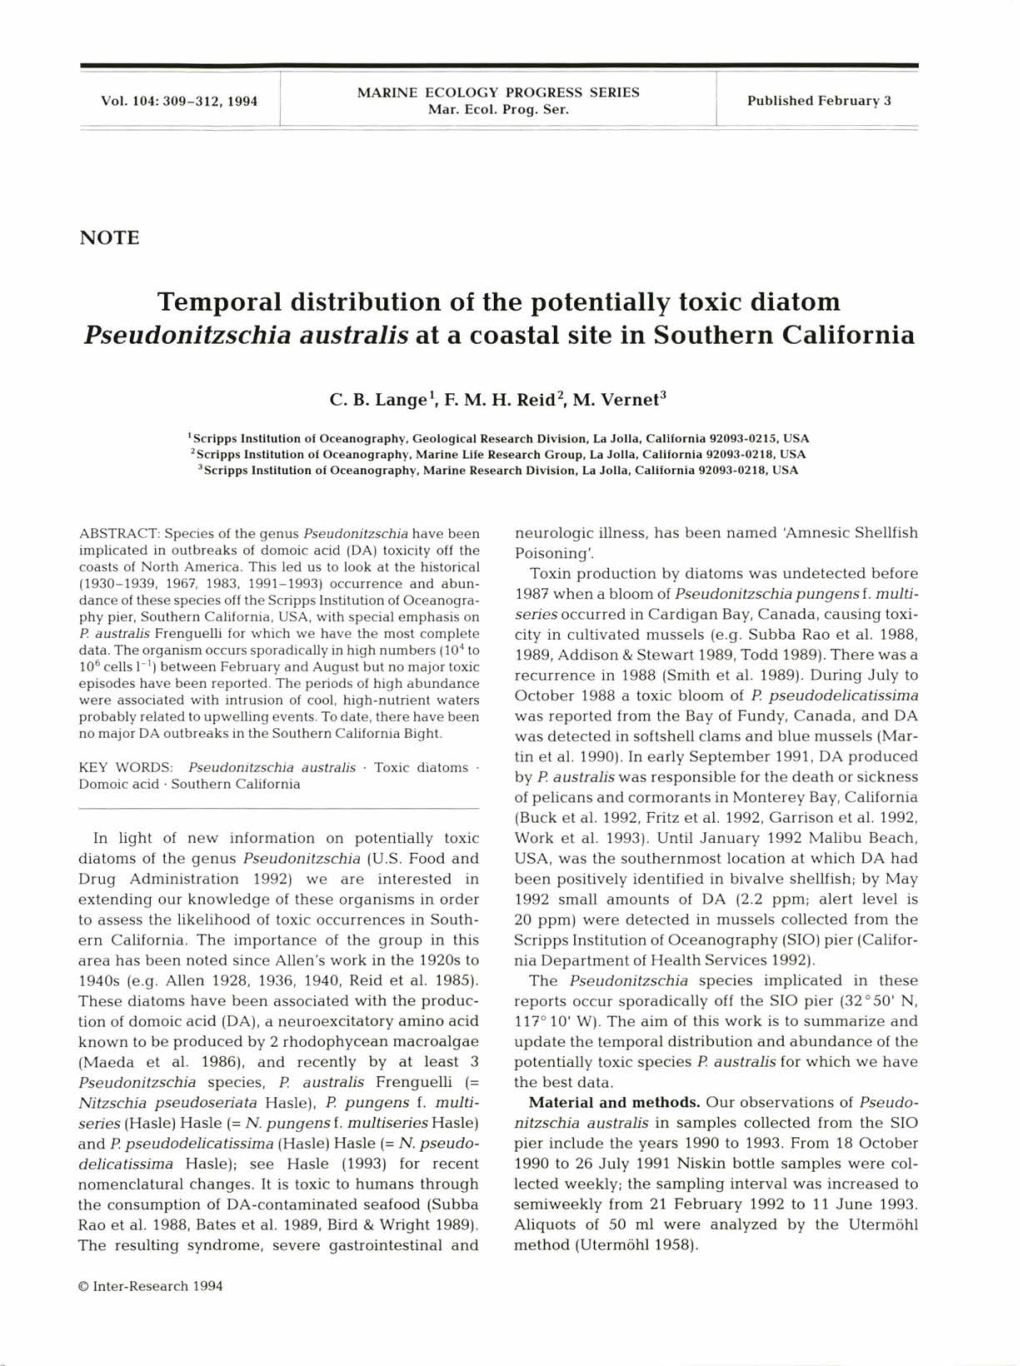 Temporal Distribution of the Potentially Toxic Diatom Pseudonitzschia Australis at a Coastal Site in Southern California